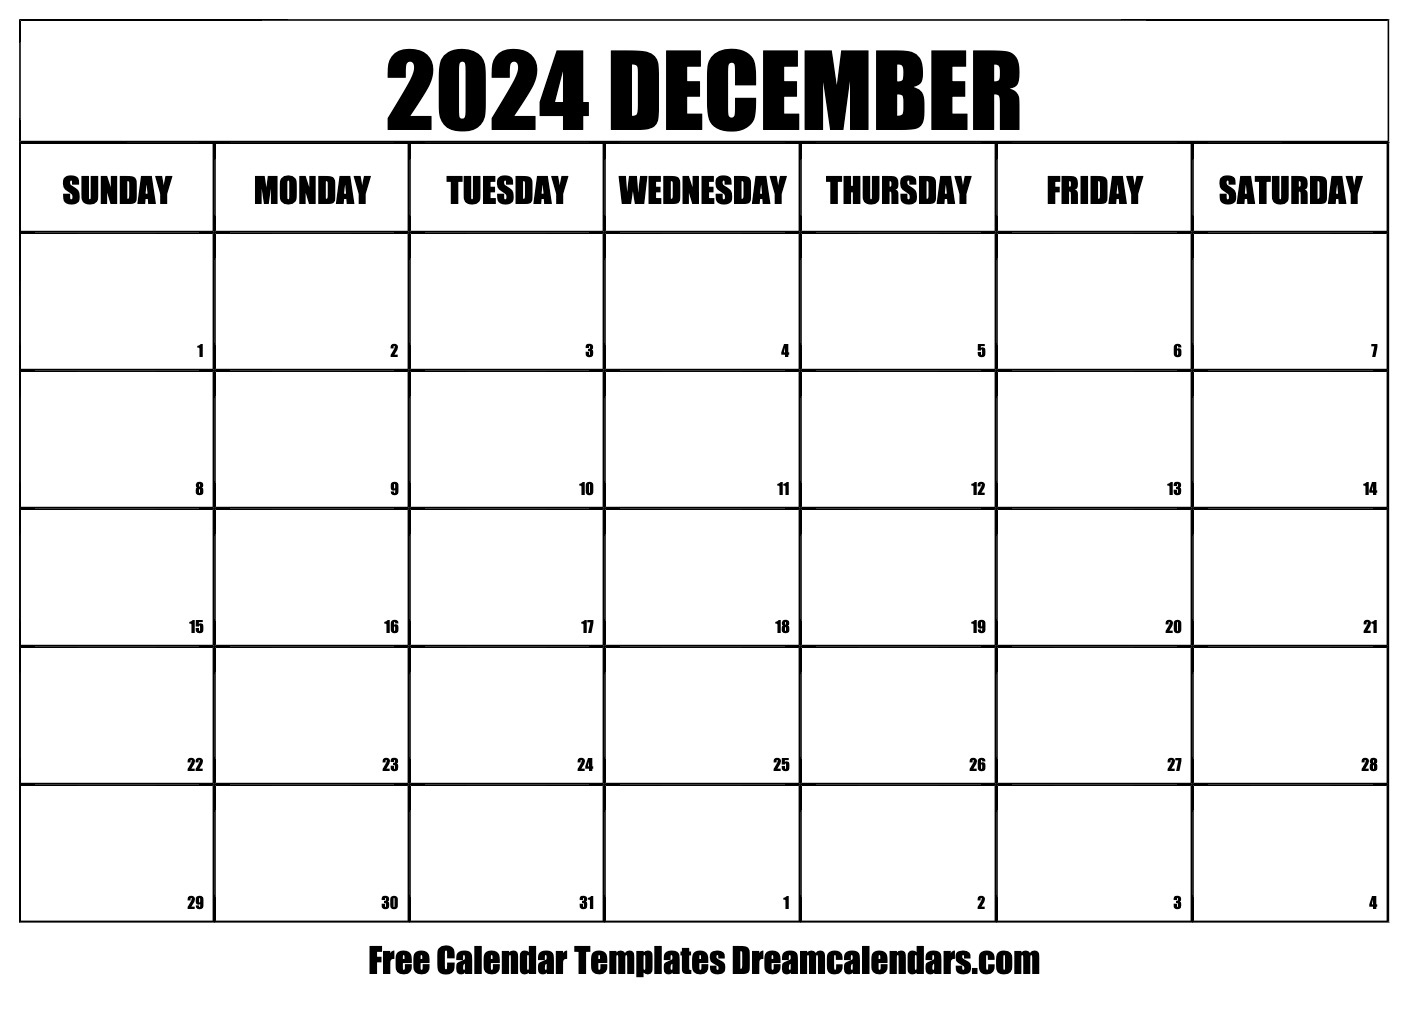 December 2024 Calendar | Free Blank Printable With Holidays pertaining to Free Printable Blank December 2024 Calendar